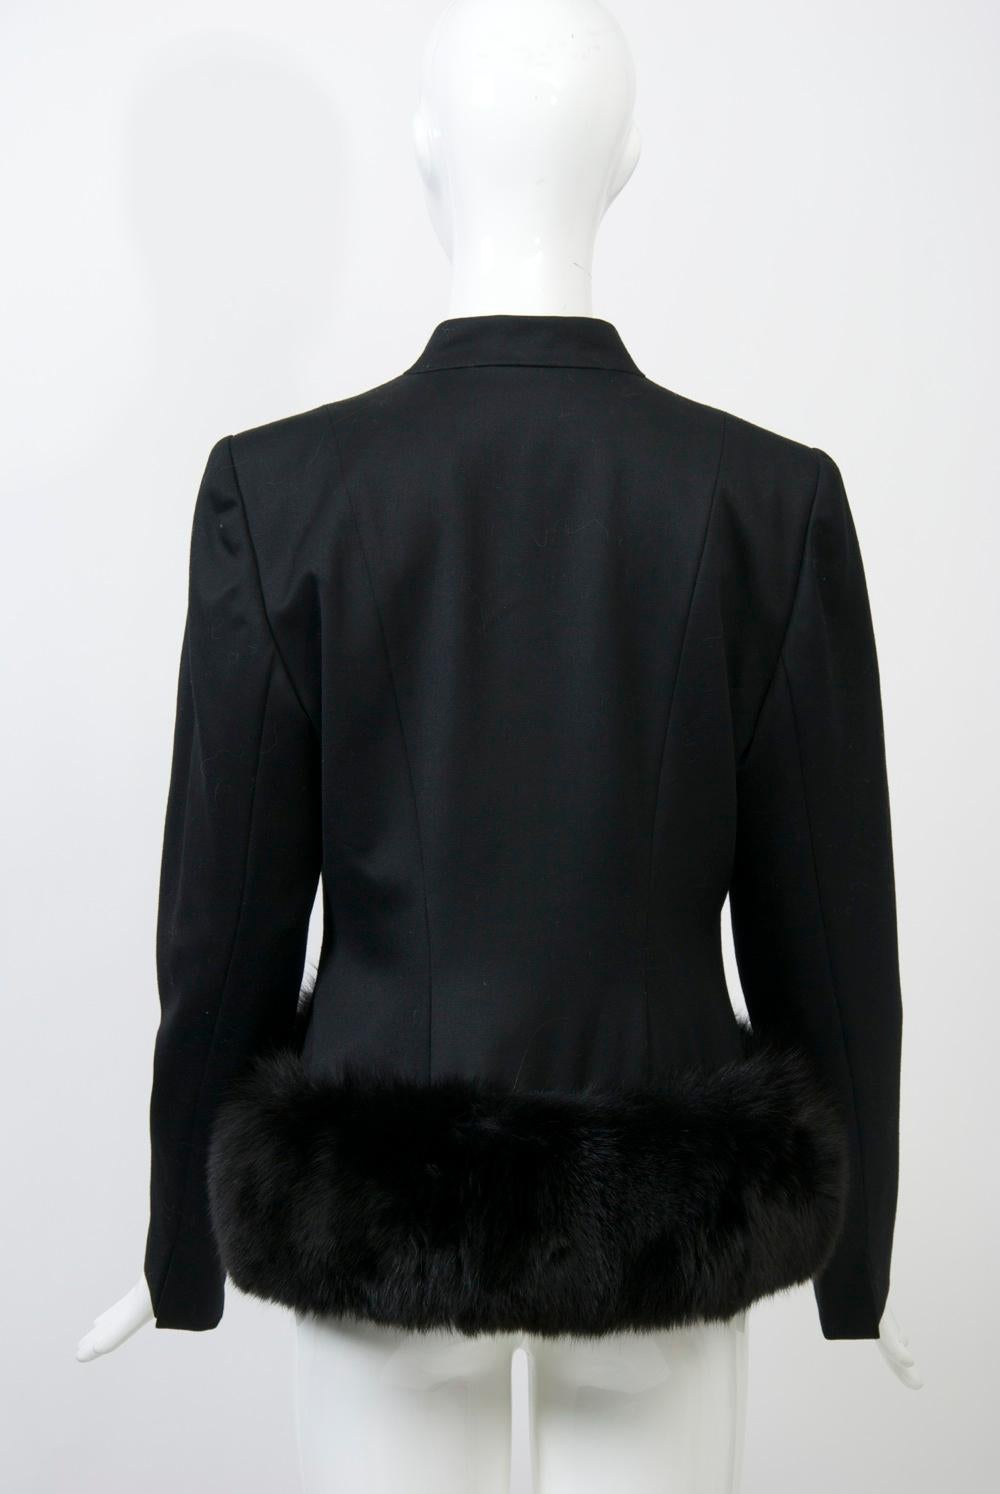 Black Pauline Trigère Fox-Trimmed Jacket For Sale